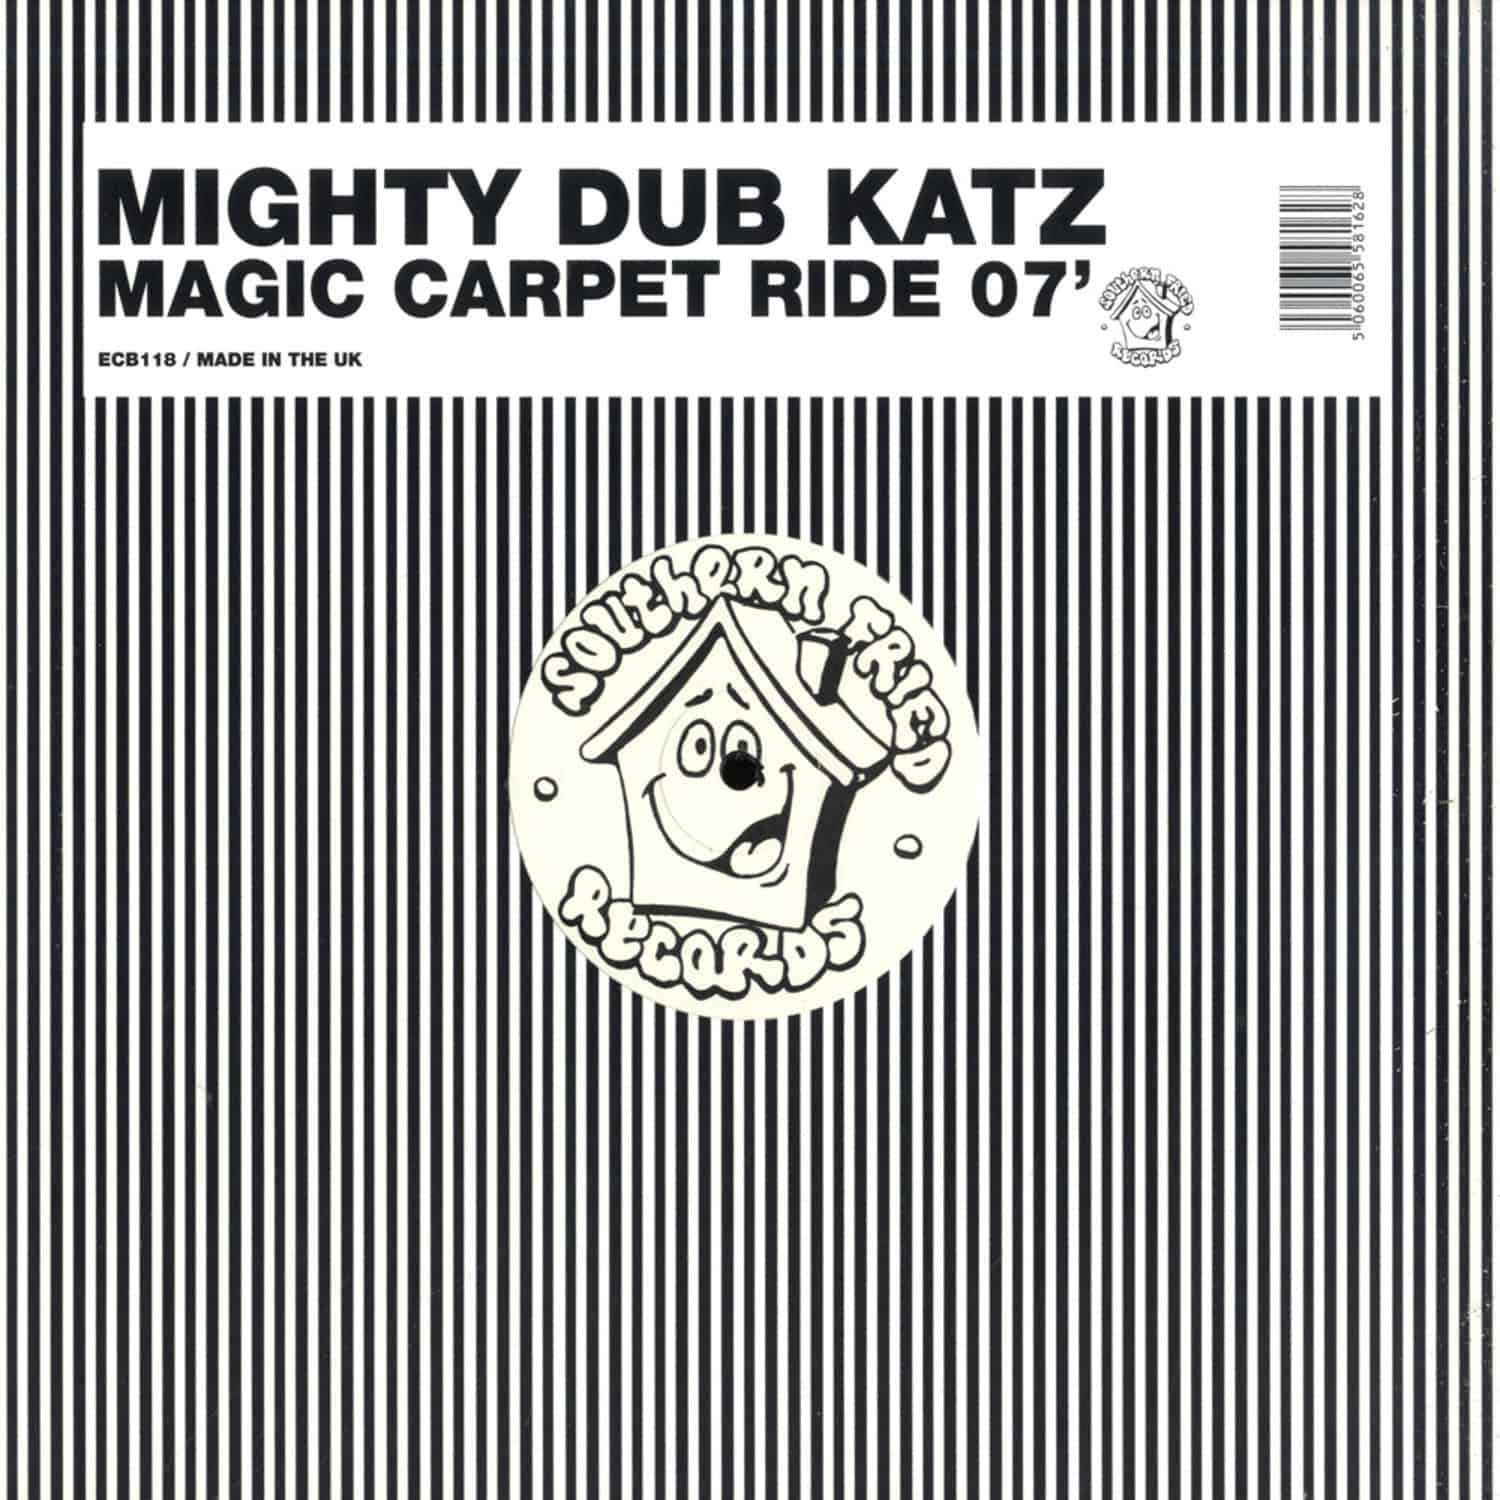 Mighty Dub Katz - MAGIC CARPET RIDE 07